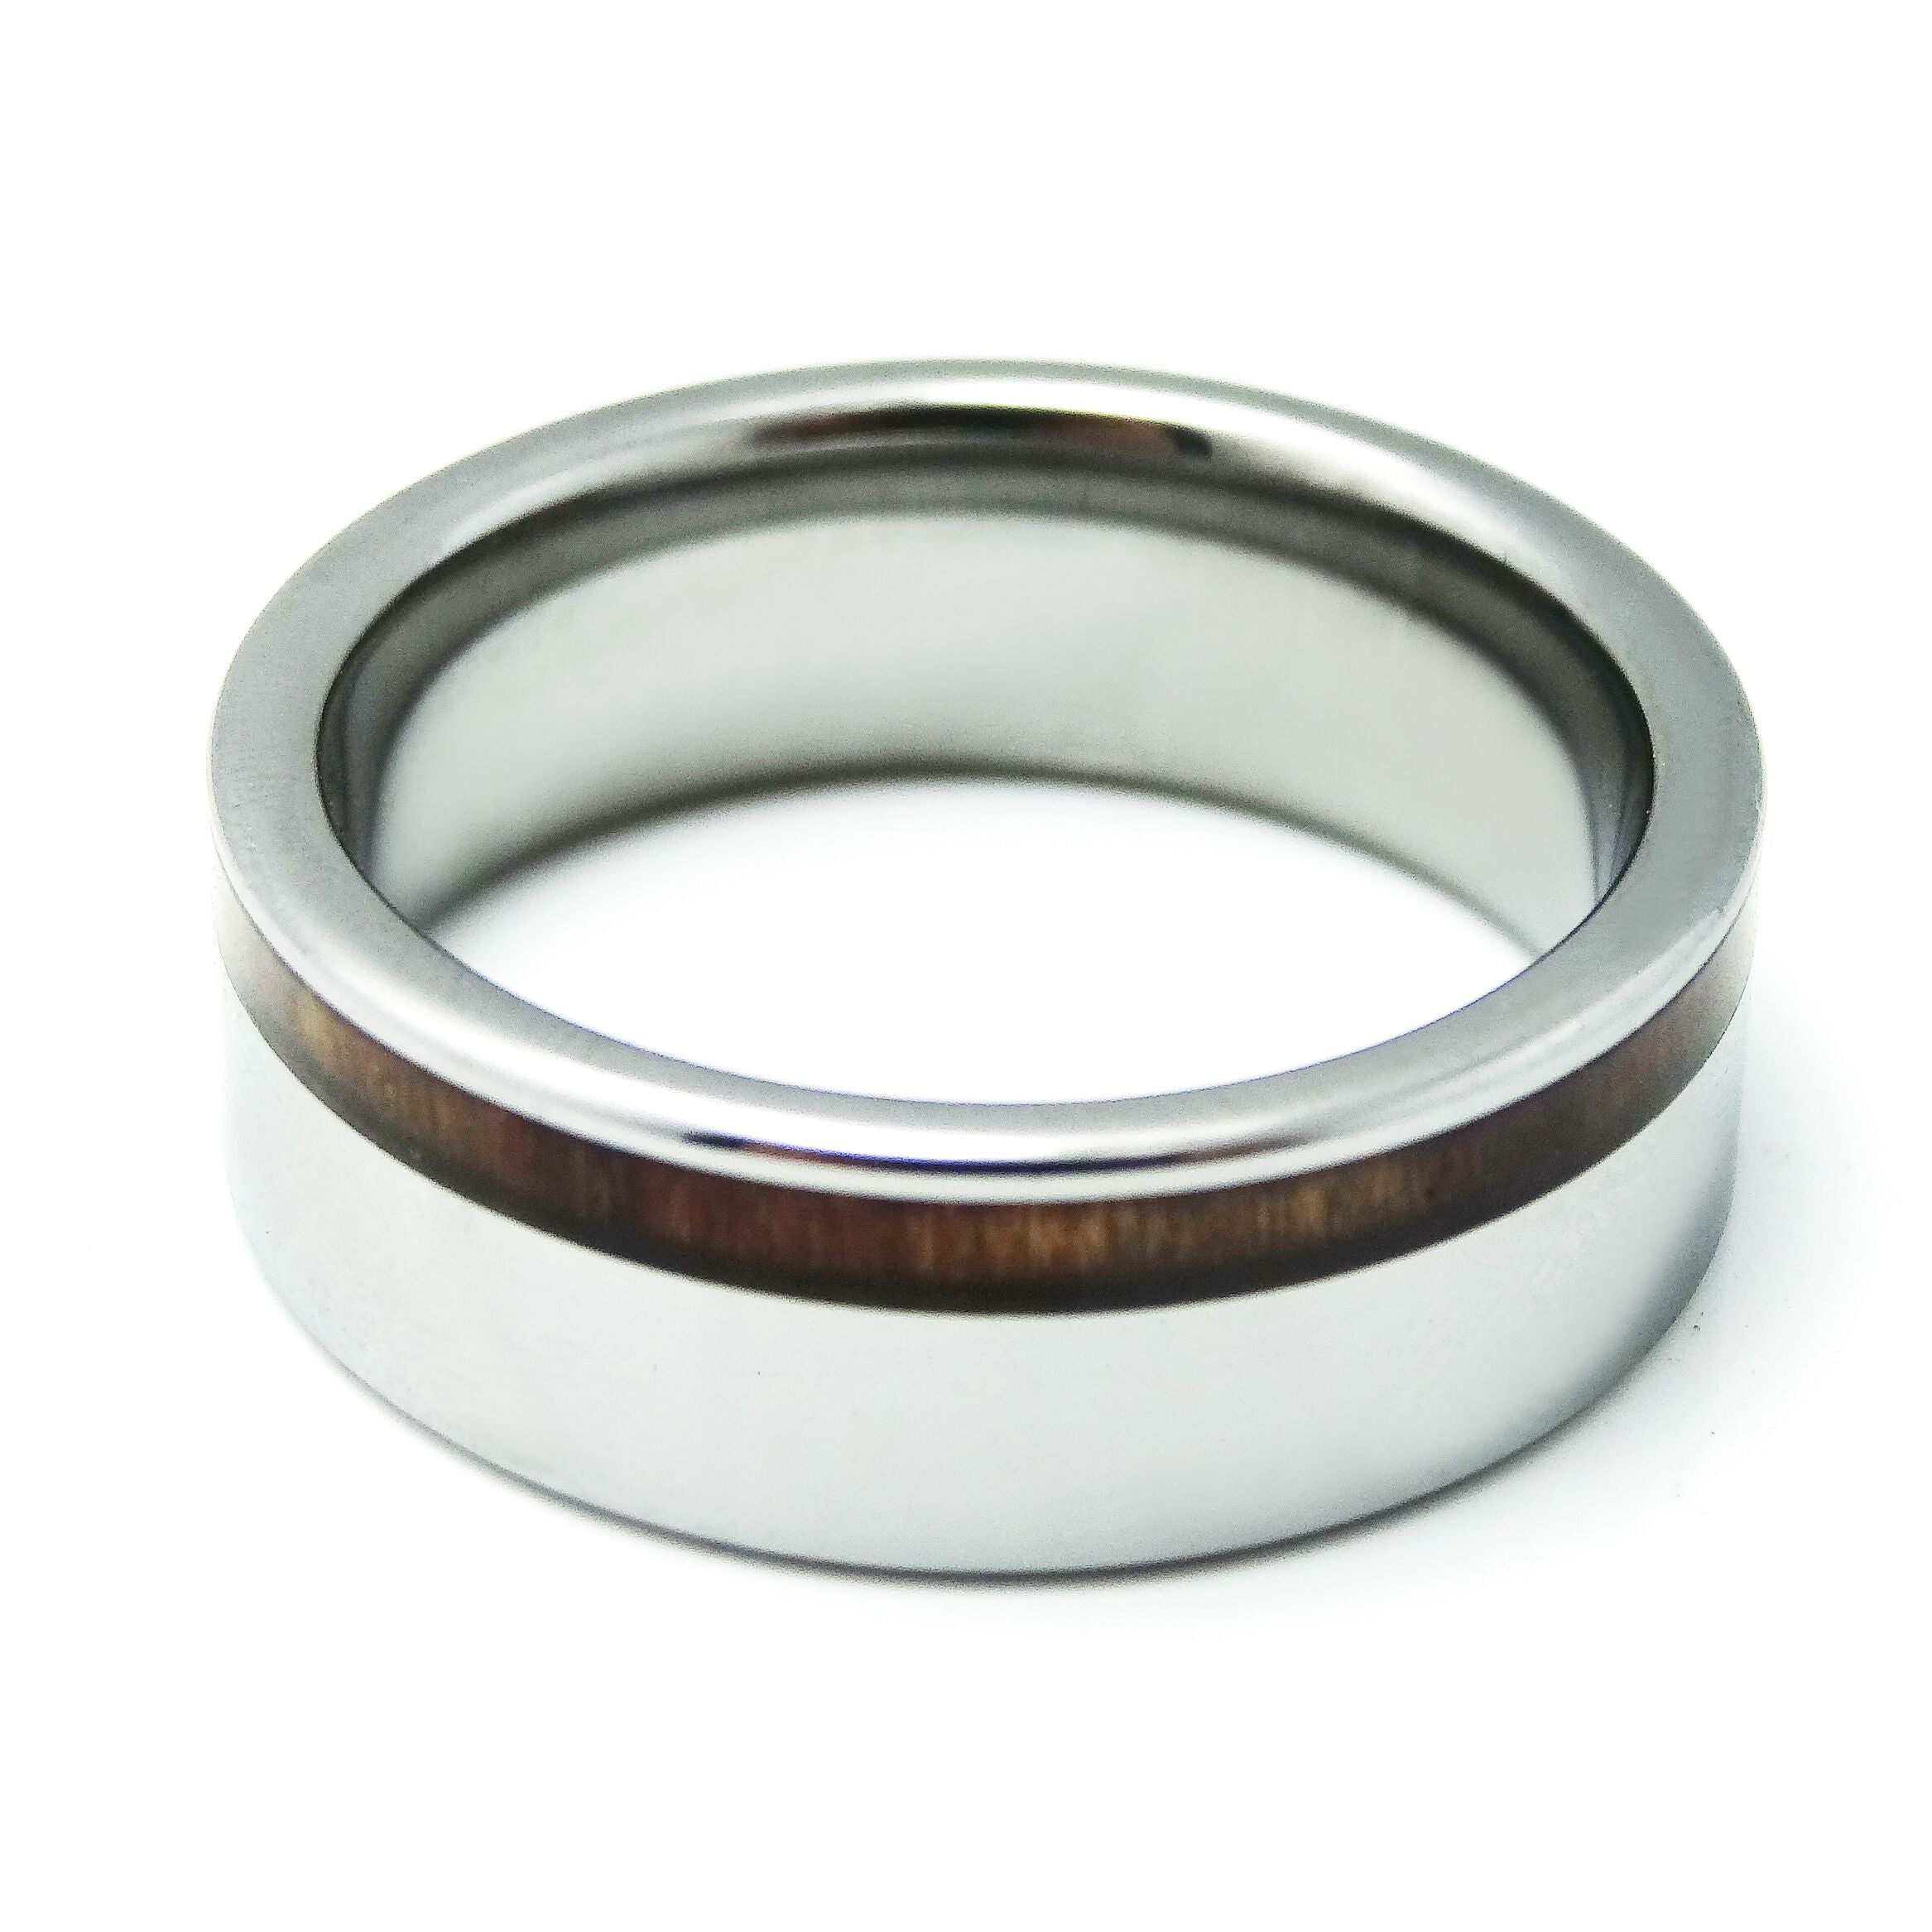 Men's Wood Rings - Everyday-Sales.com